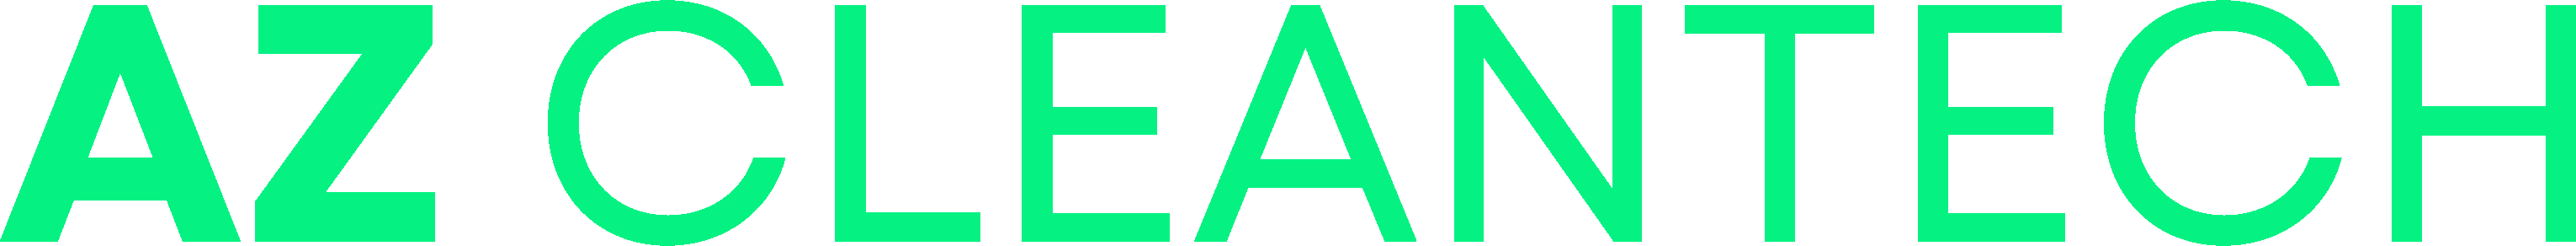 Logo-green-print.png